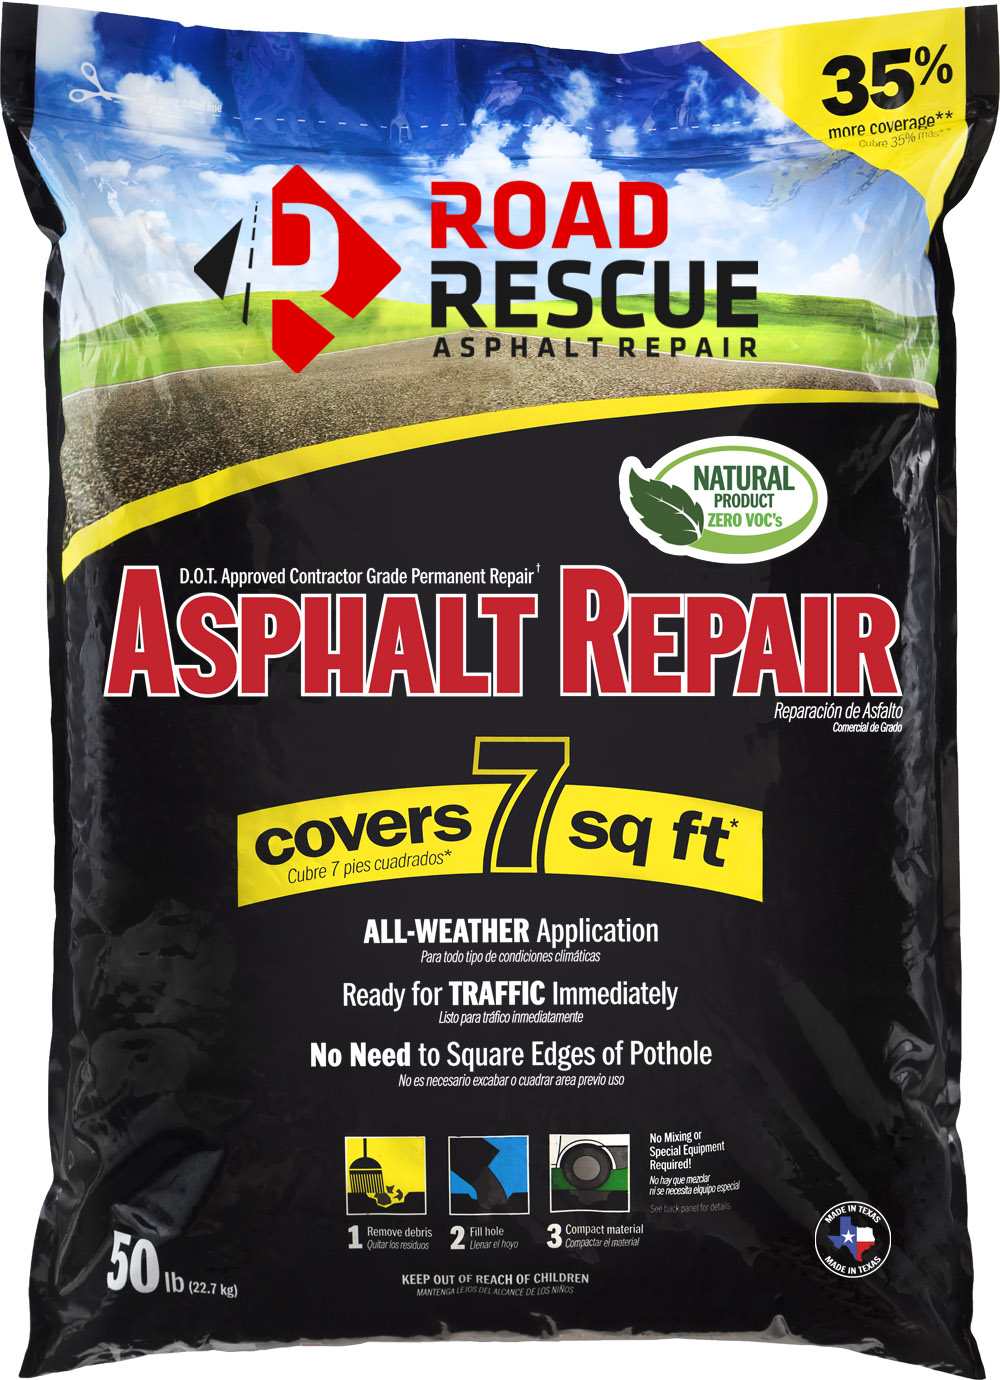 Road Rescue Asphalt Repair - image 1 of 2